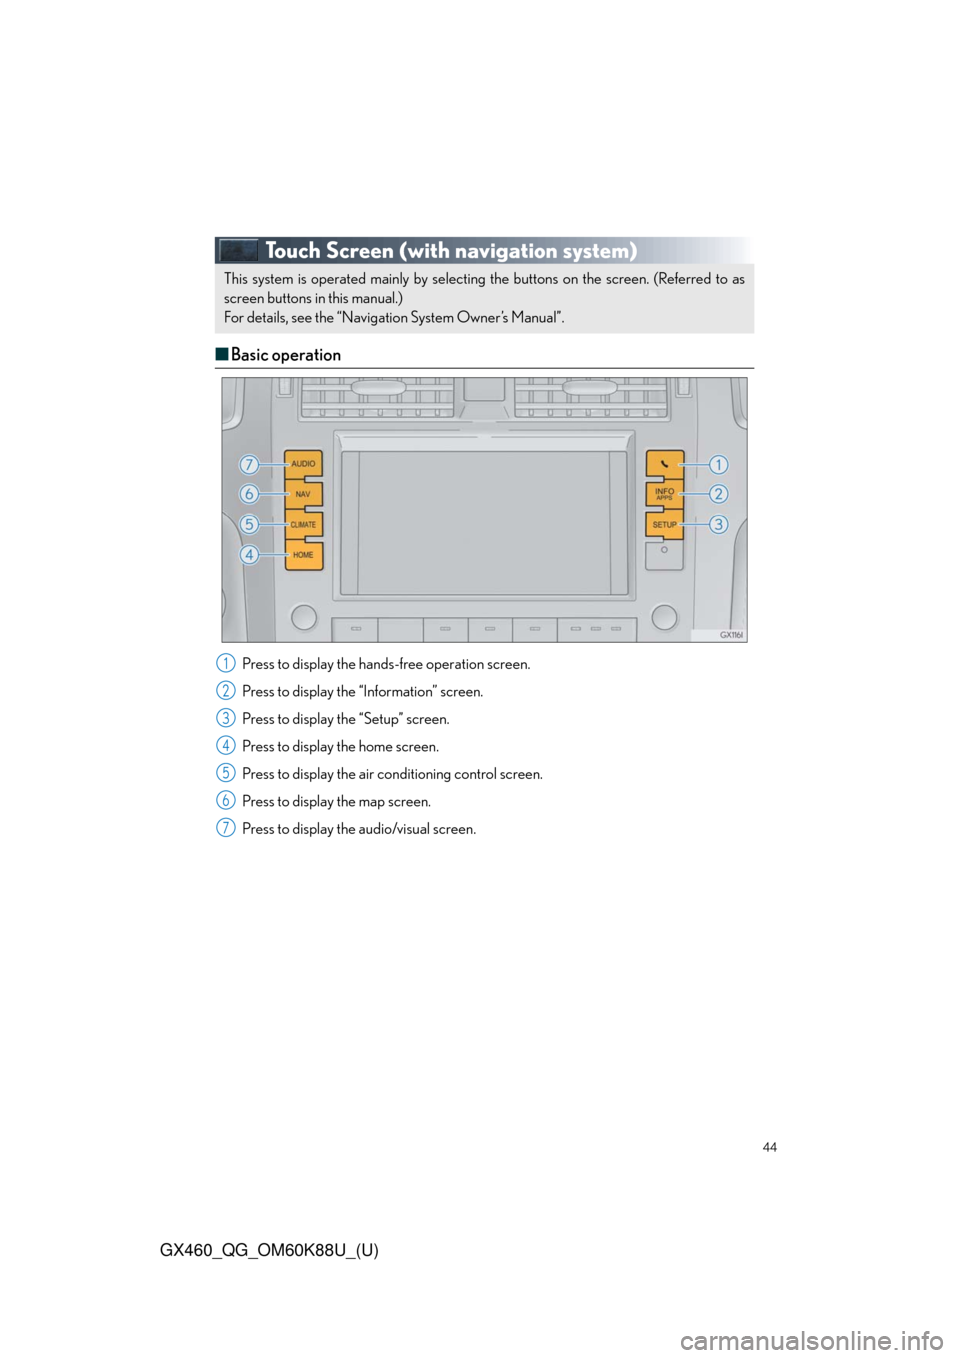 Lexus GX460 2014  Key information / LEXUS 2014 GX460 QUICK GUIDE  (OM60K88U) Service Manual 44
GX460_QG_OM60K88U_(U)
Touch Screen (with navigation system)
■Basic operation
Press to display the hands-free operation screen.
Press to display the “Information” screen.
Press to display the 